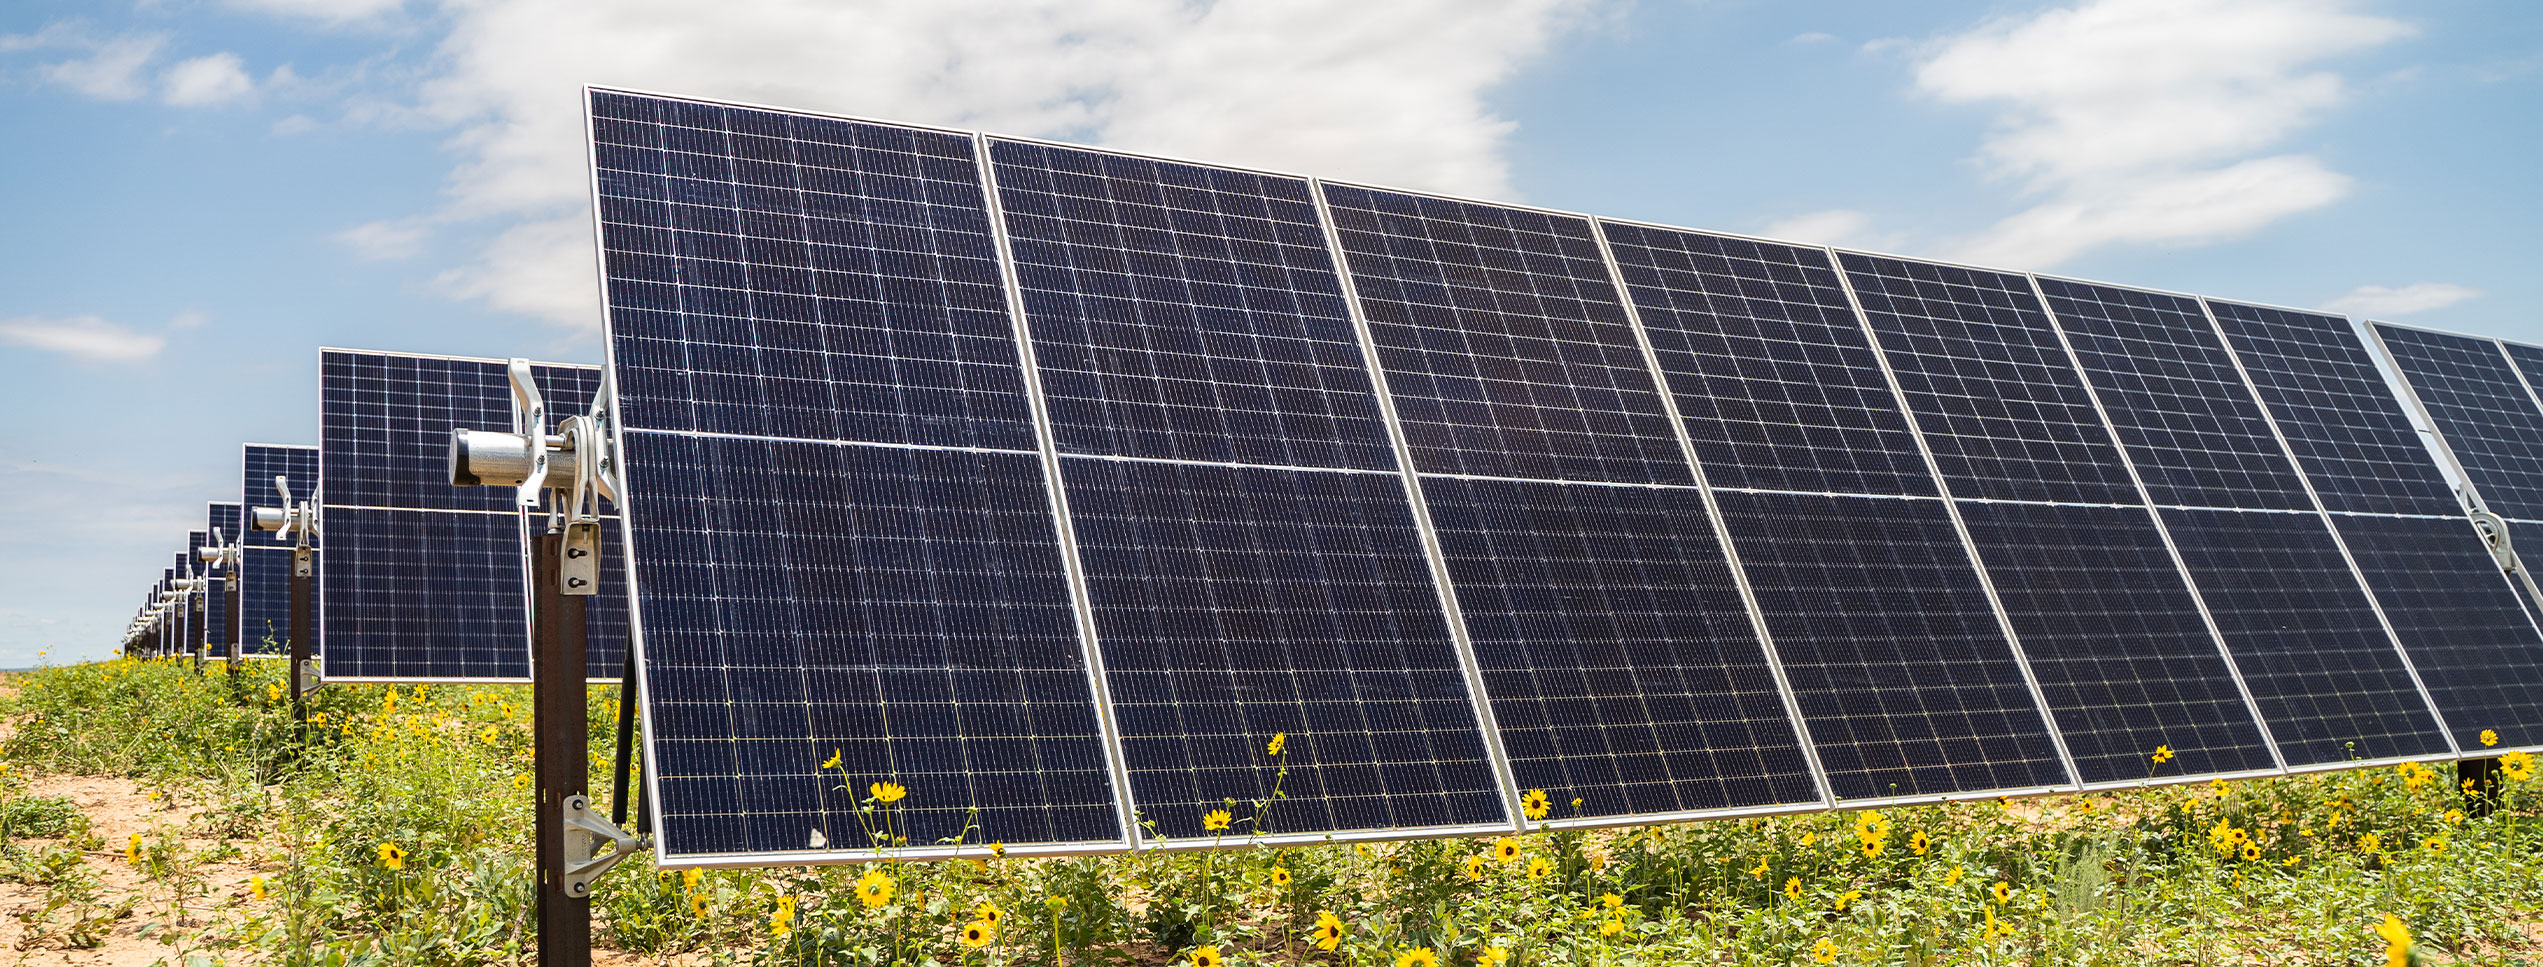 Texas Solar Nova solar energy project